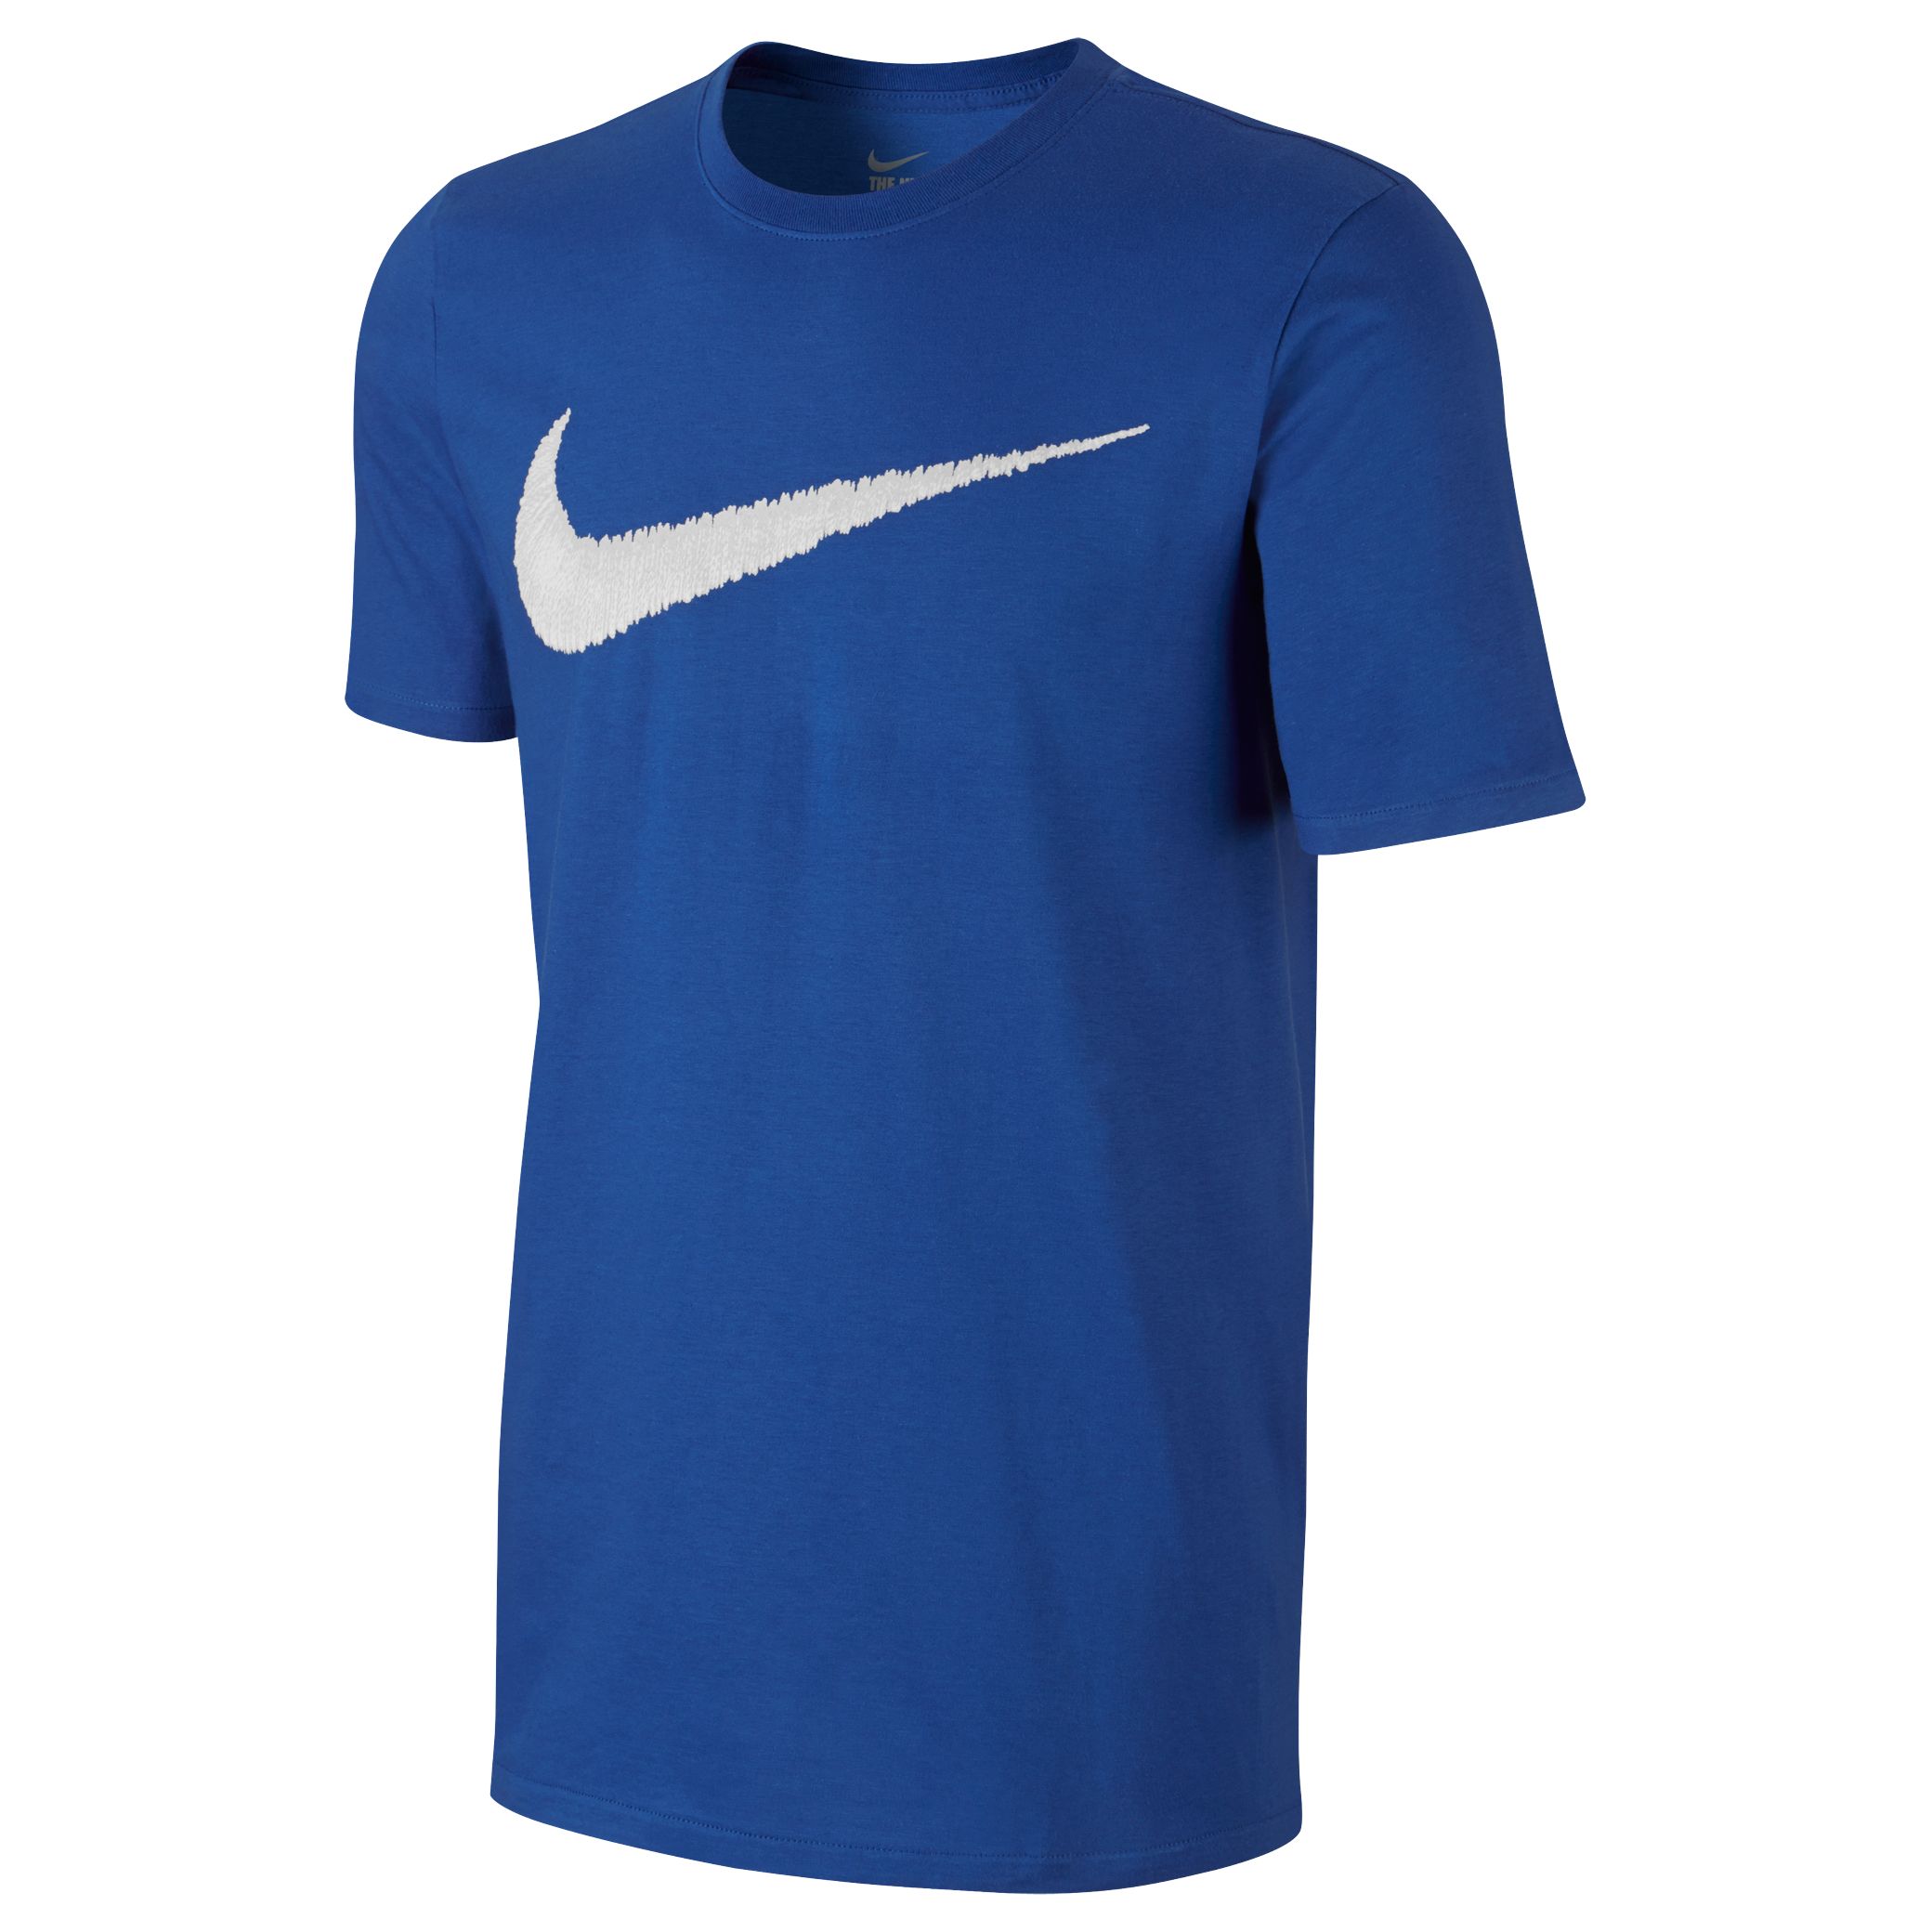 Nike Sportswear Swoosh Cotton T-Shirt, Blue/White